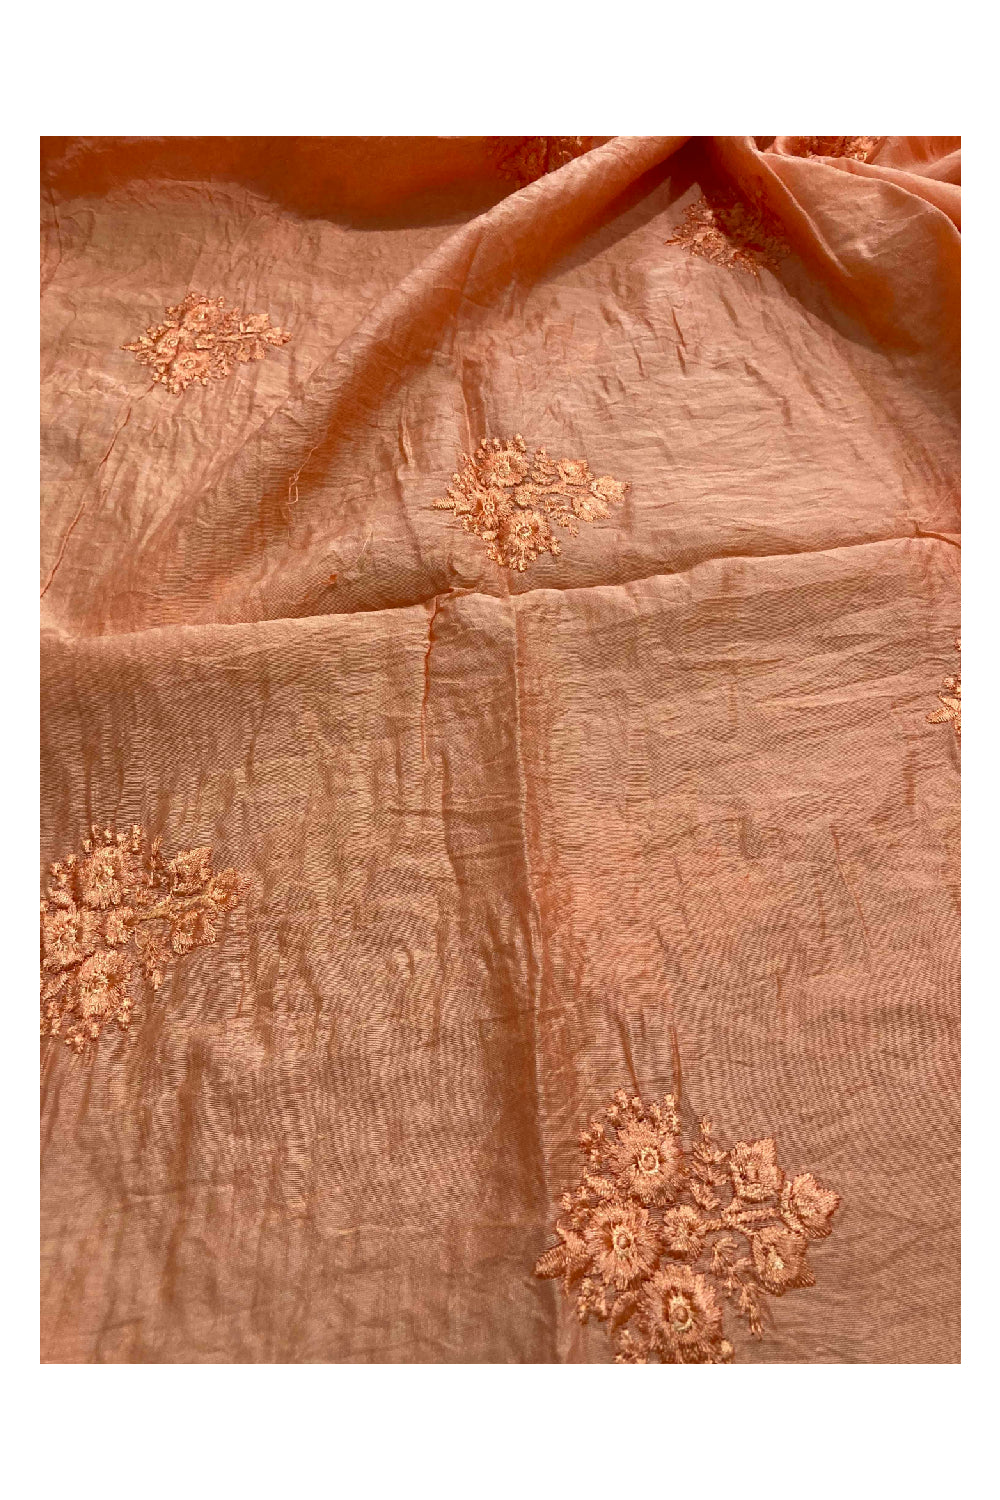 Southloom™ Semi Jute Churidar Salwar Suit Material in Bright Orange with Sequins Work